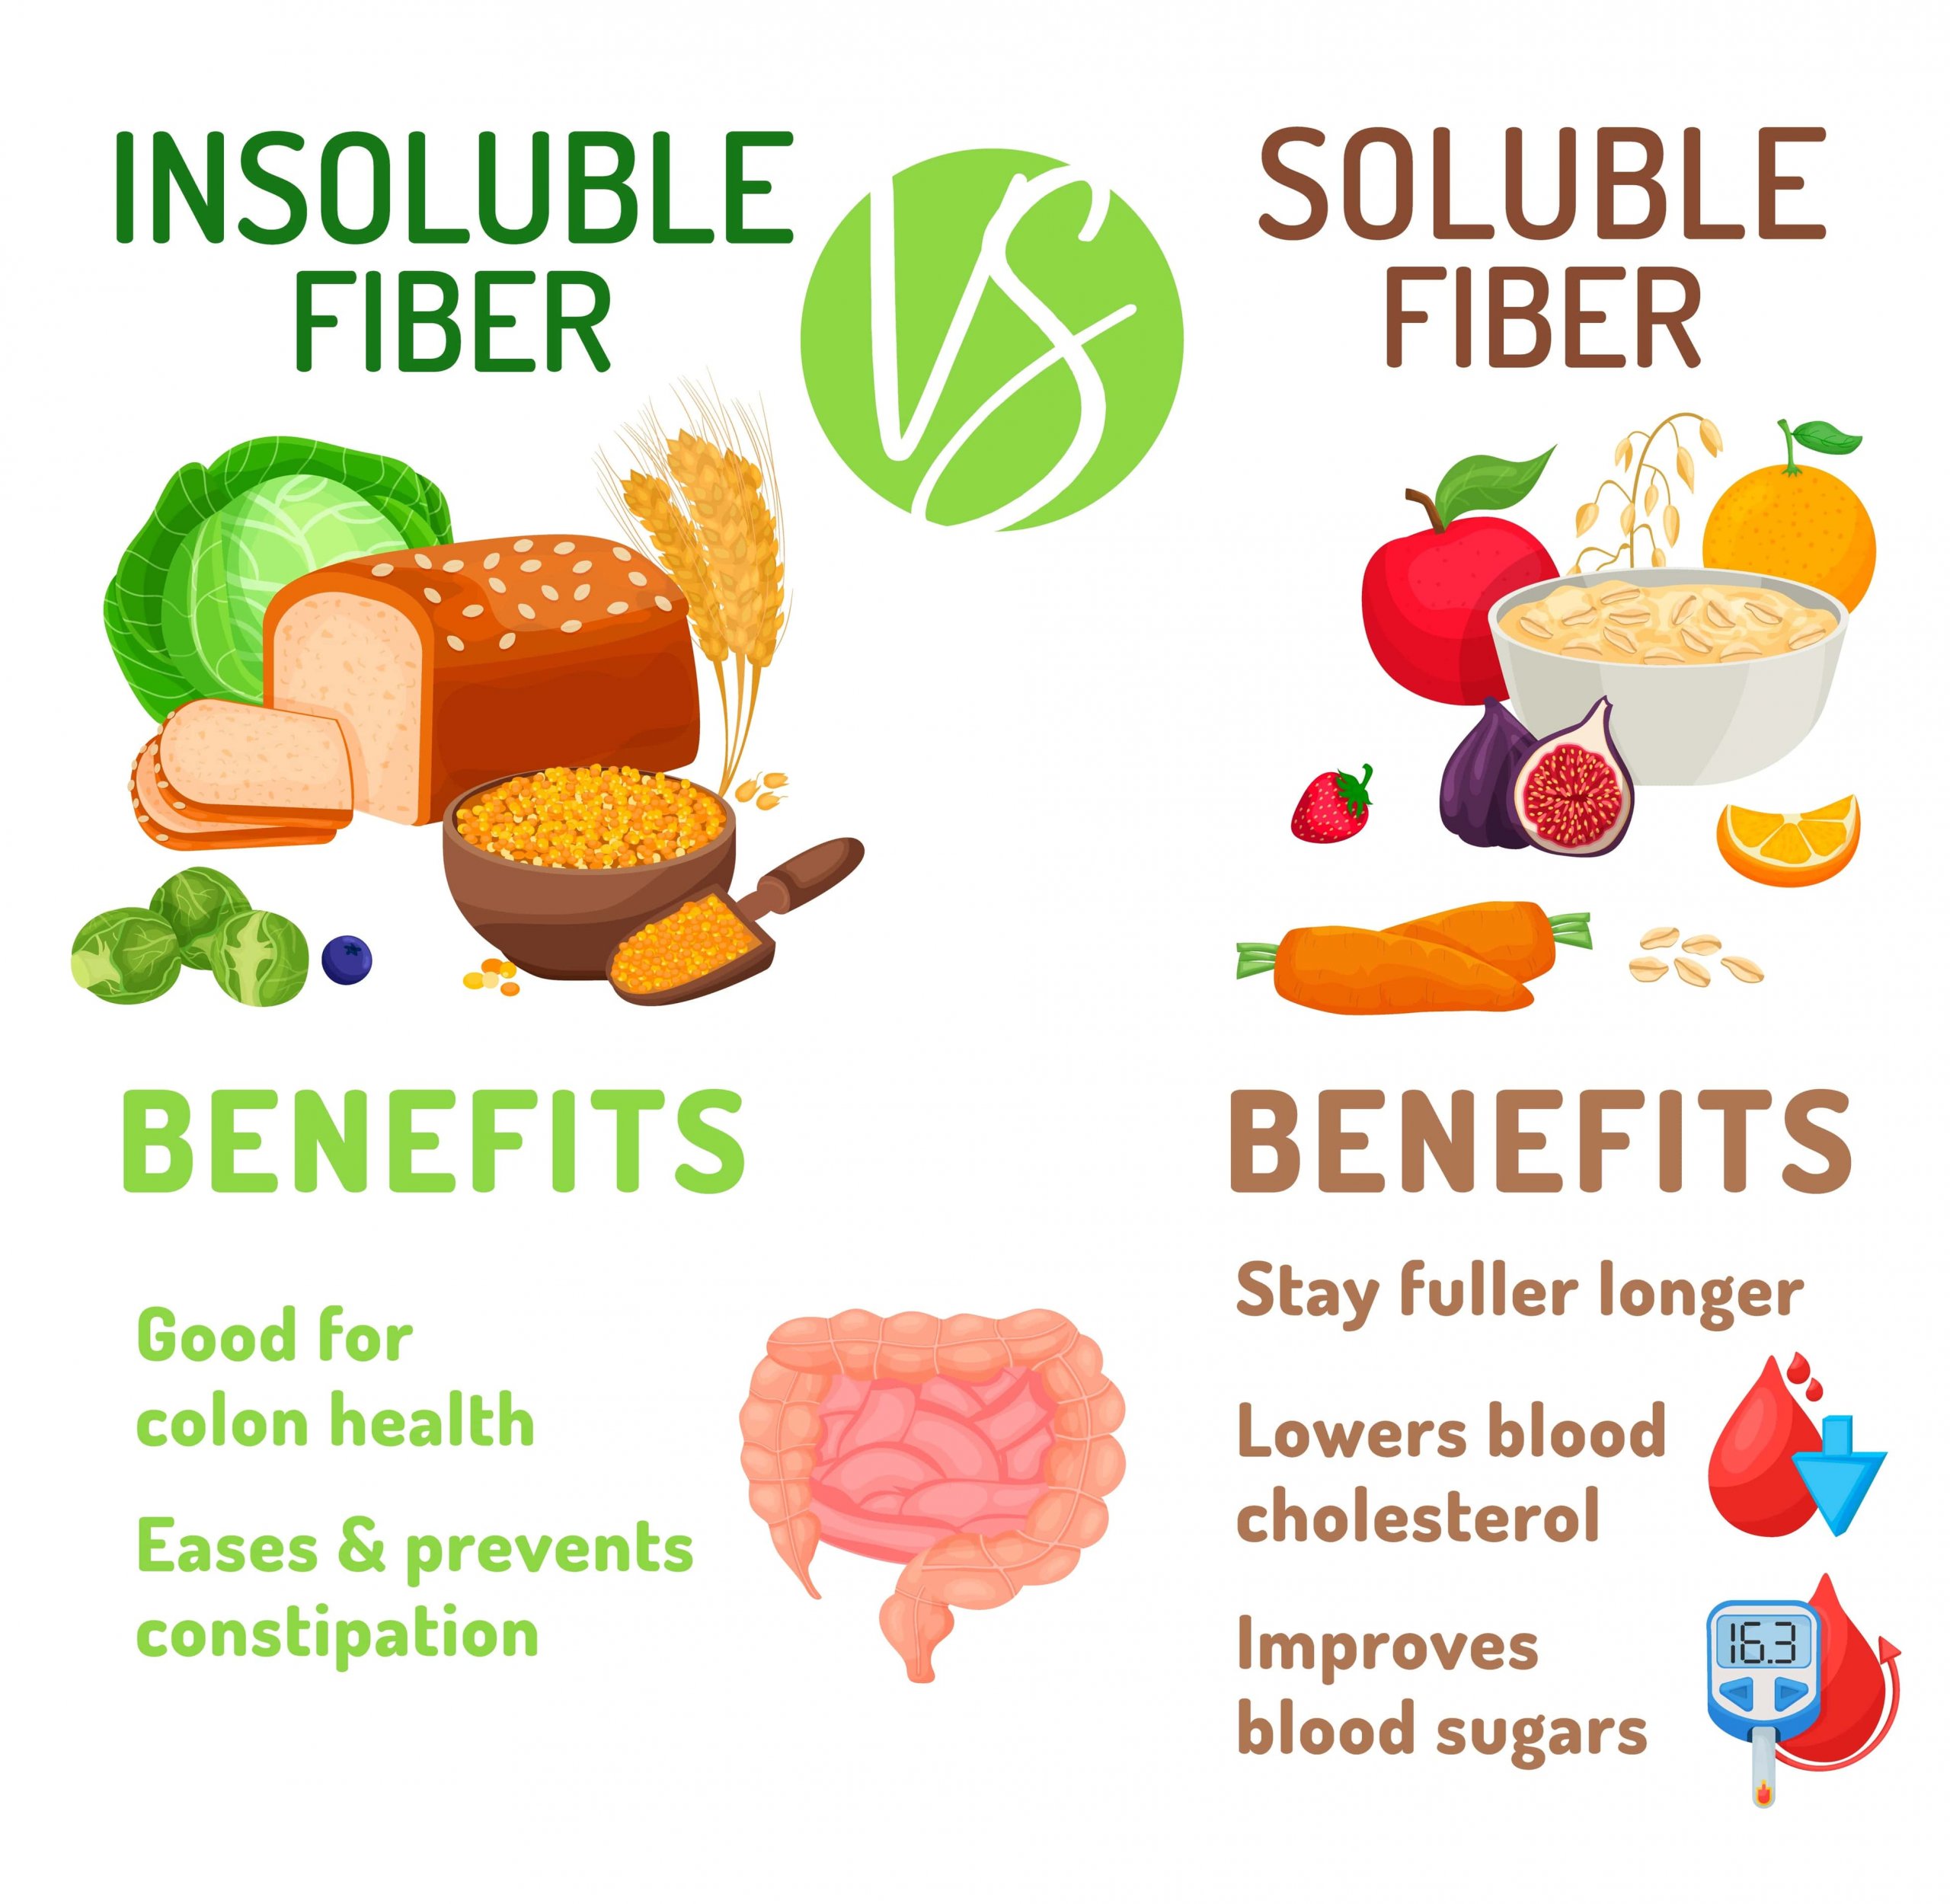 Insoluble fiber vs soluble fiber